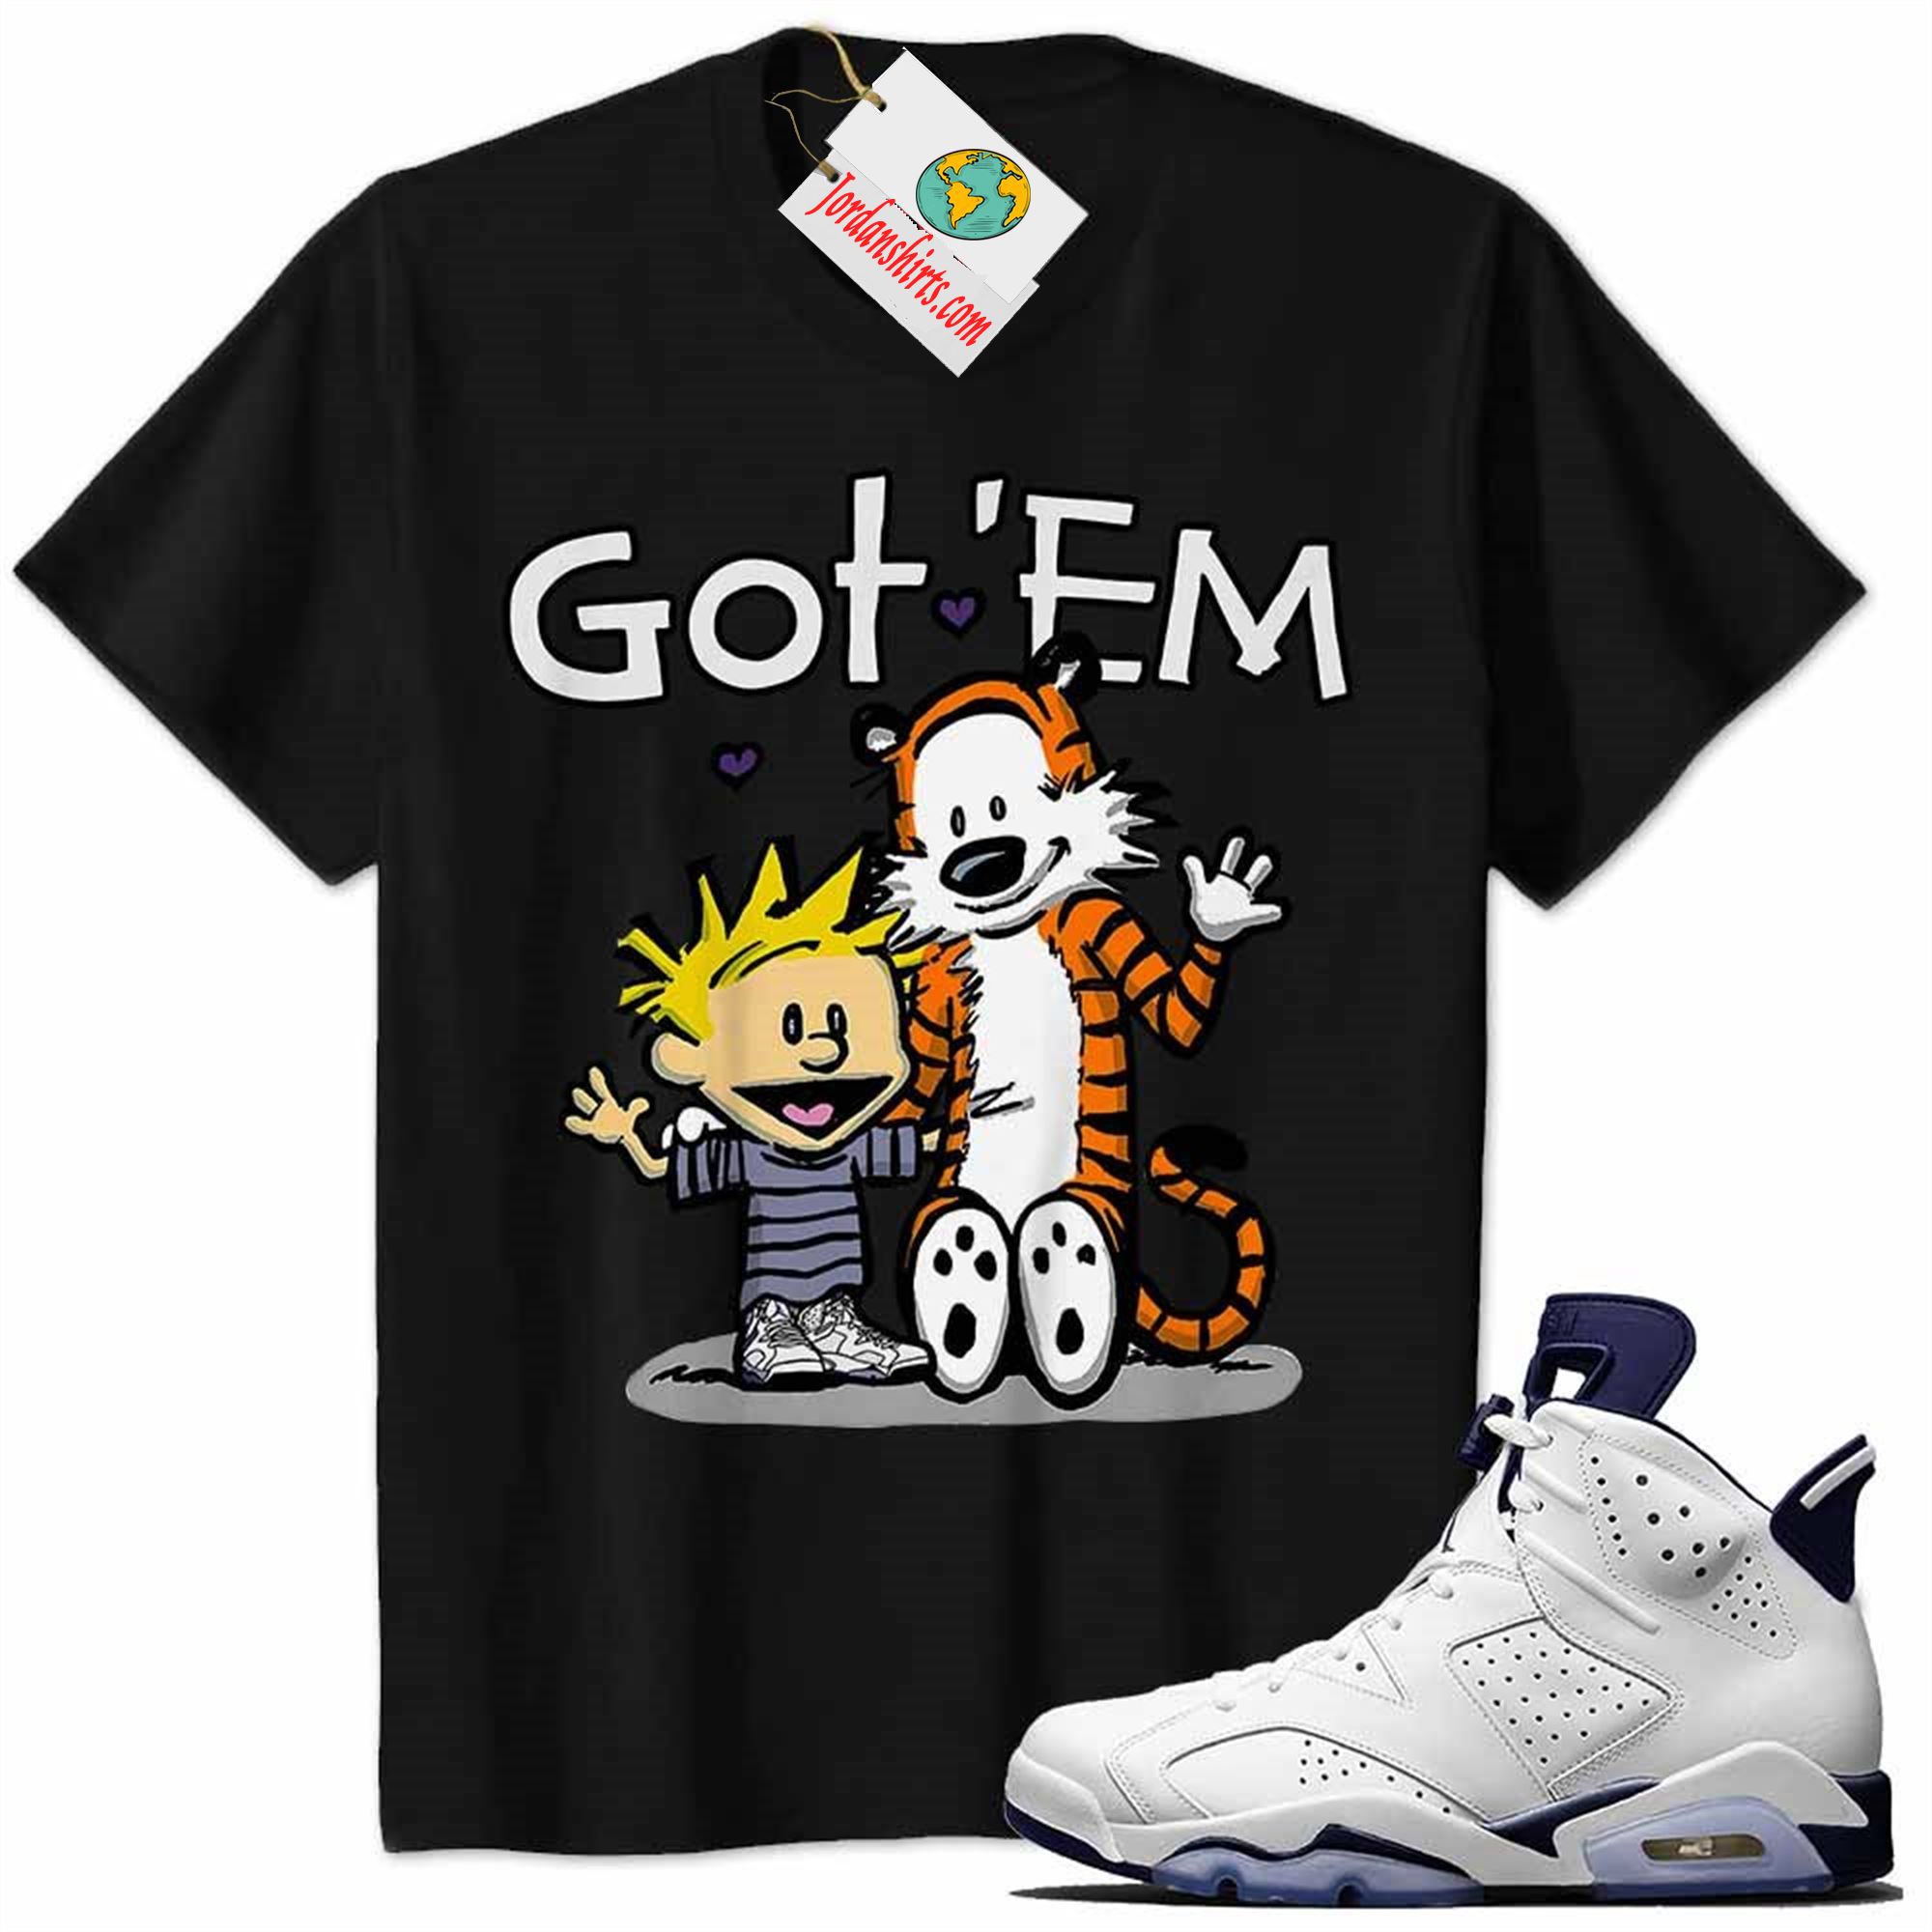 Jordan 6 Shirt, Jordan 6 Midnight Navy Shirt Calvin And Hobbes Got Em Black Size Up To 5xl